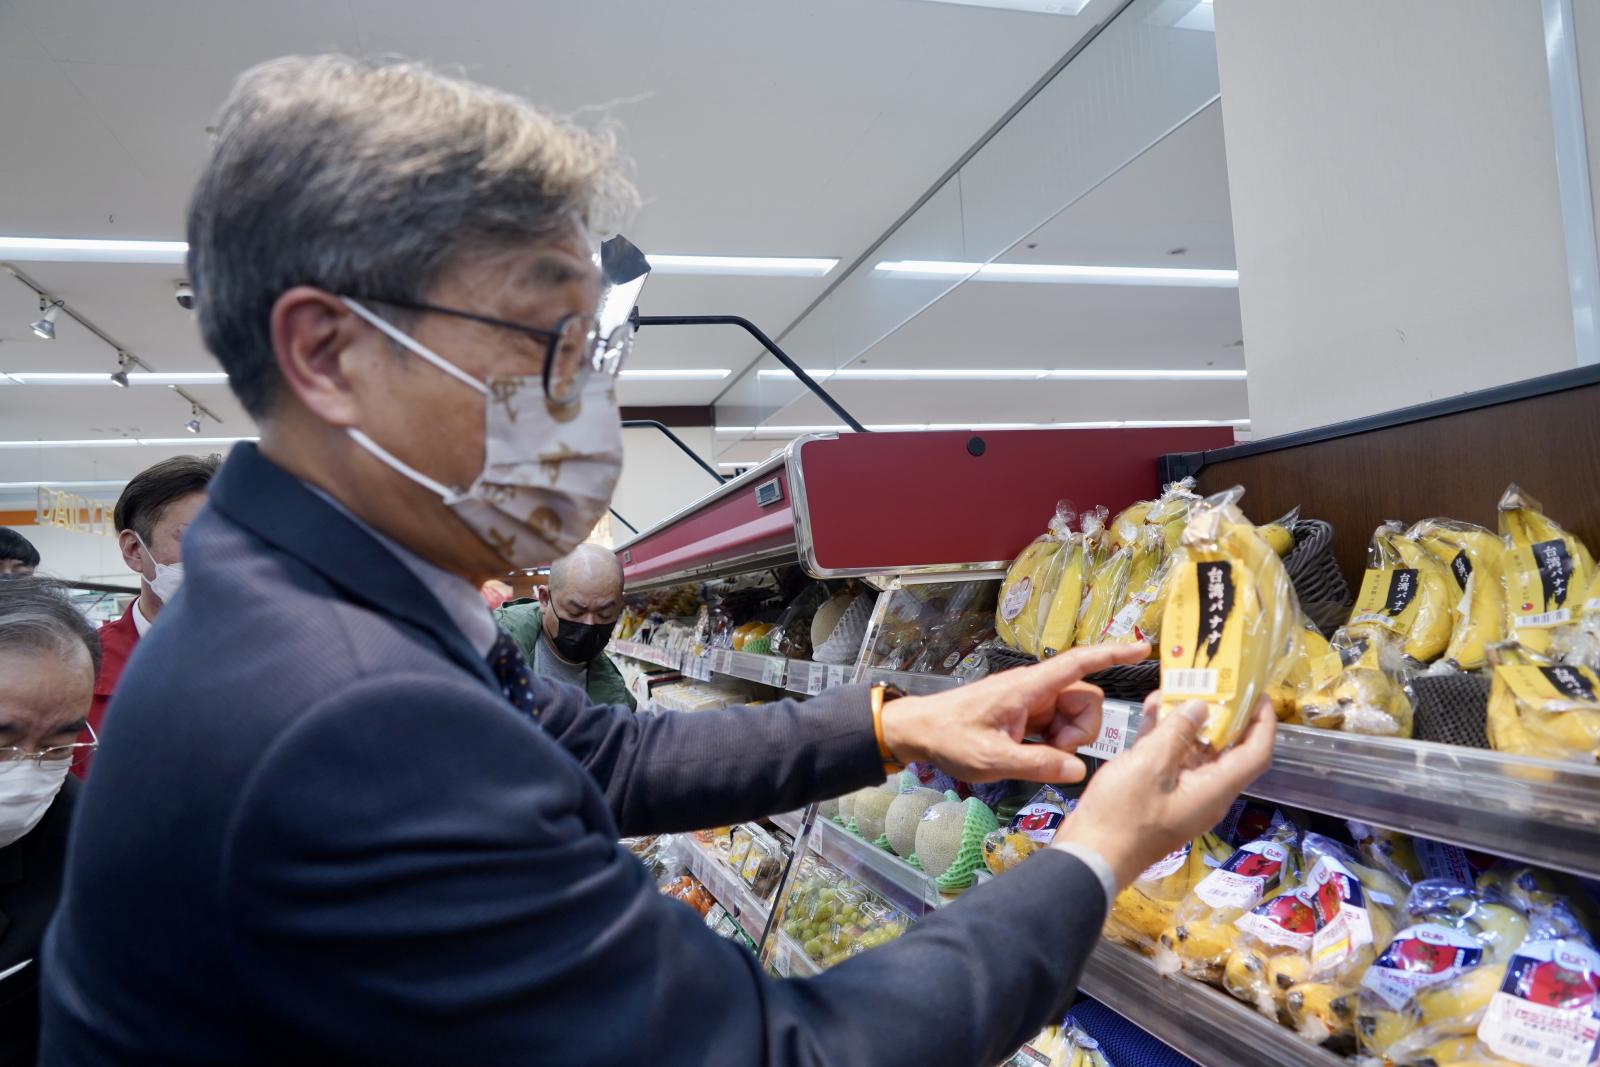 olympic超市人員向陳駿季副主委等人展示該超市門市販售臺灣香蕉